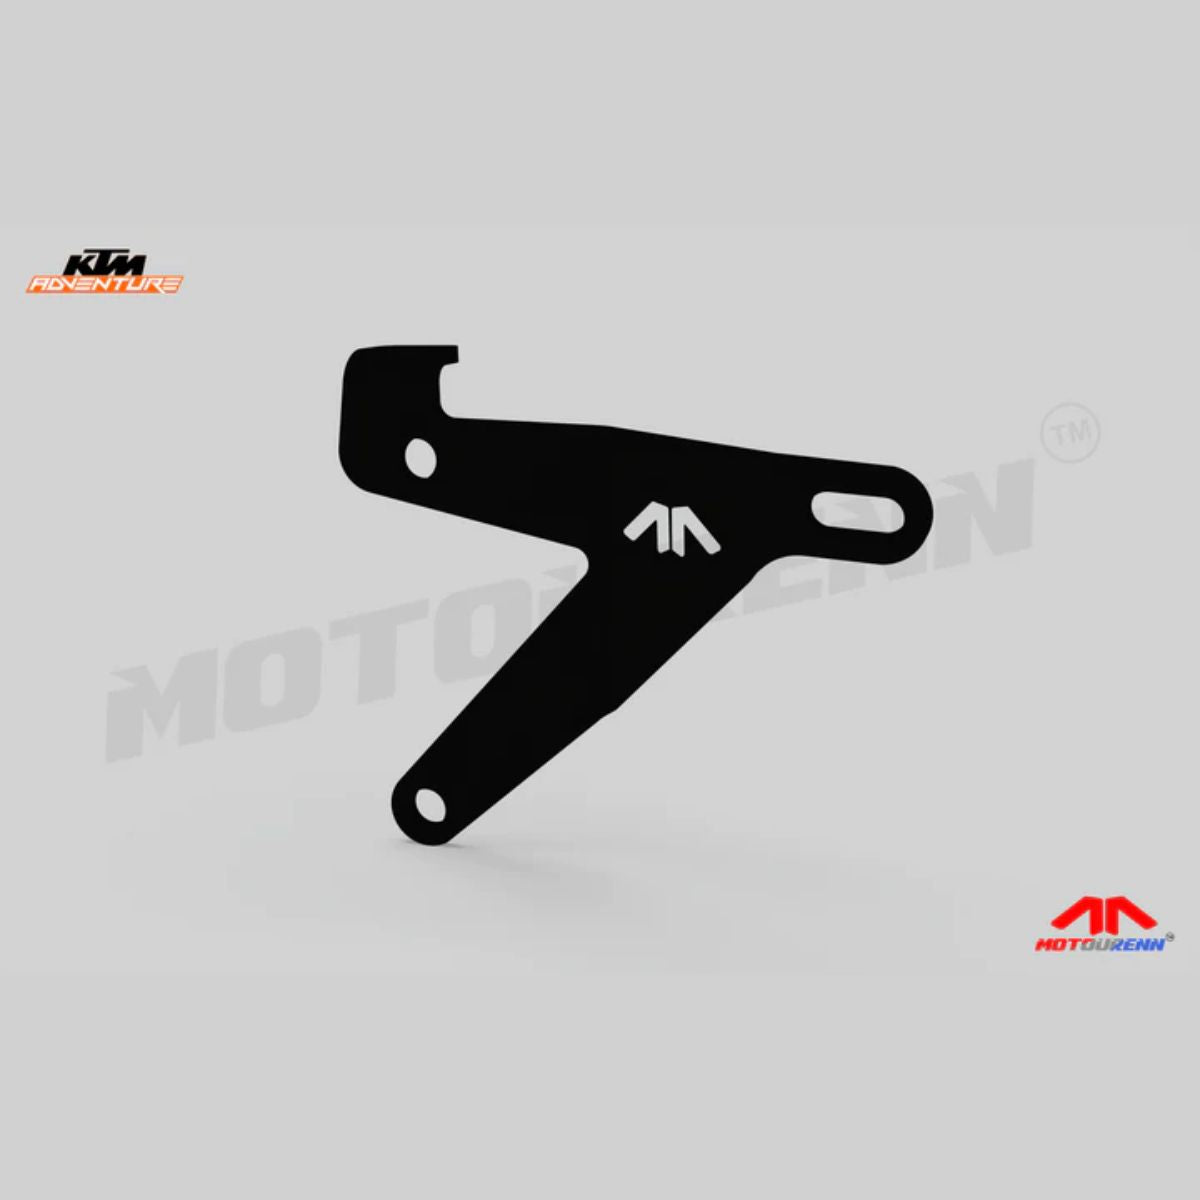 KTM Adventure 390/250 Headlight Reinforcement Neck Brace 5